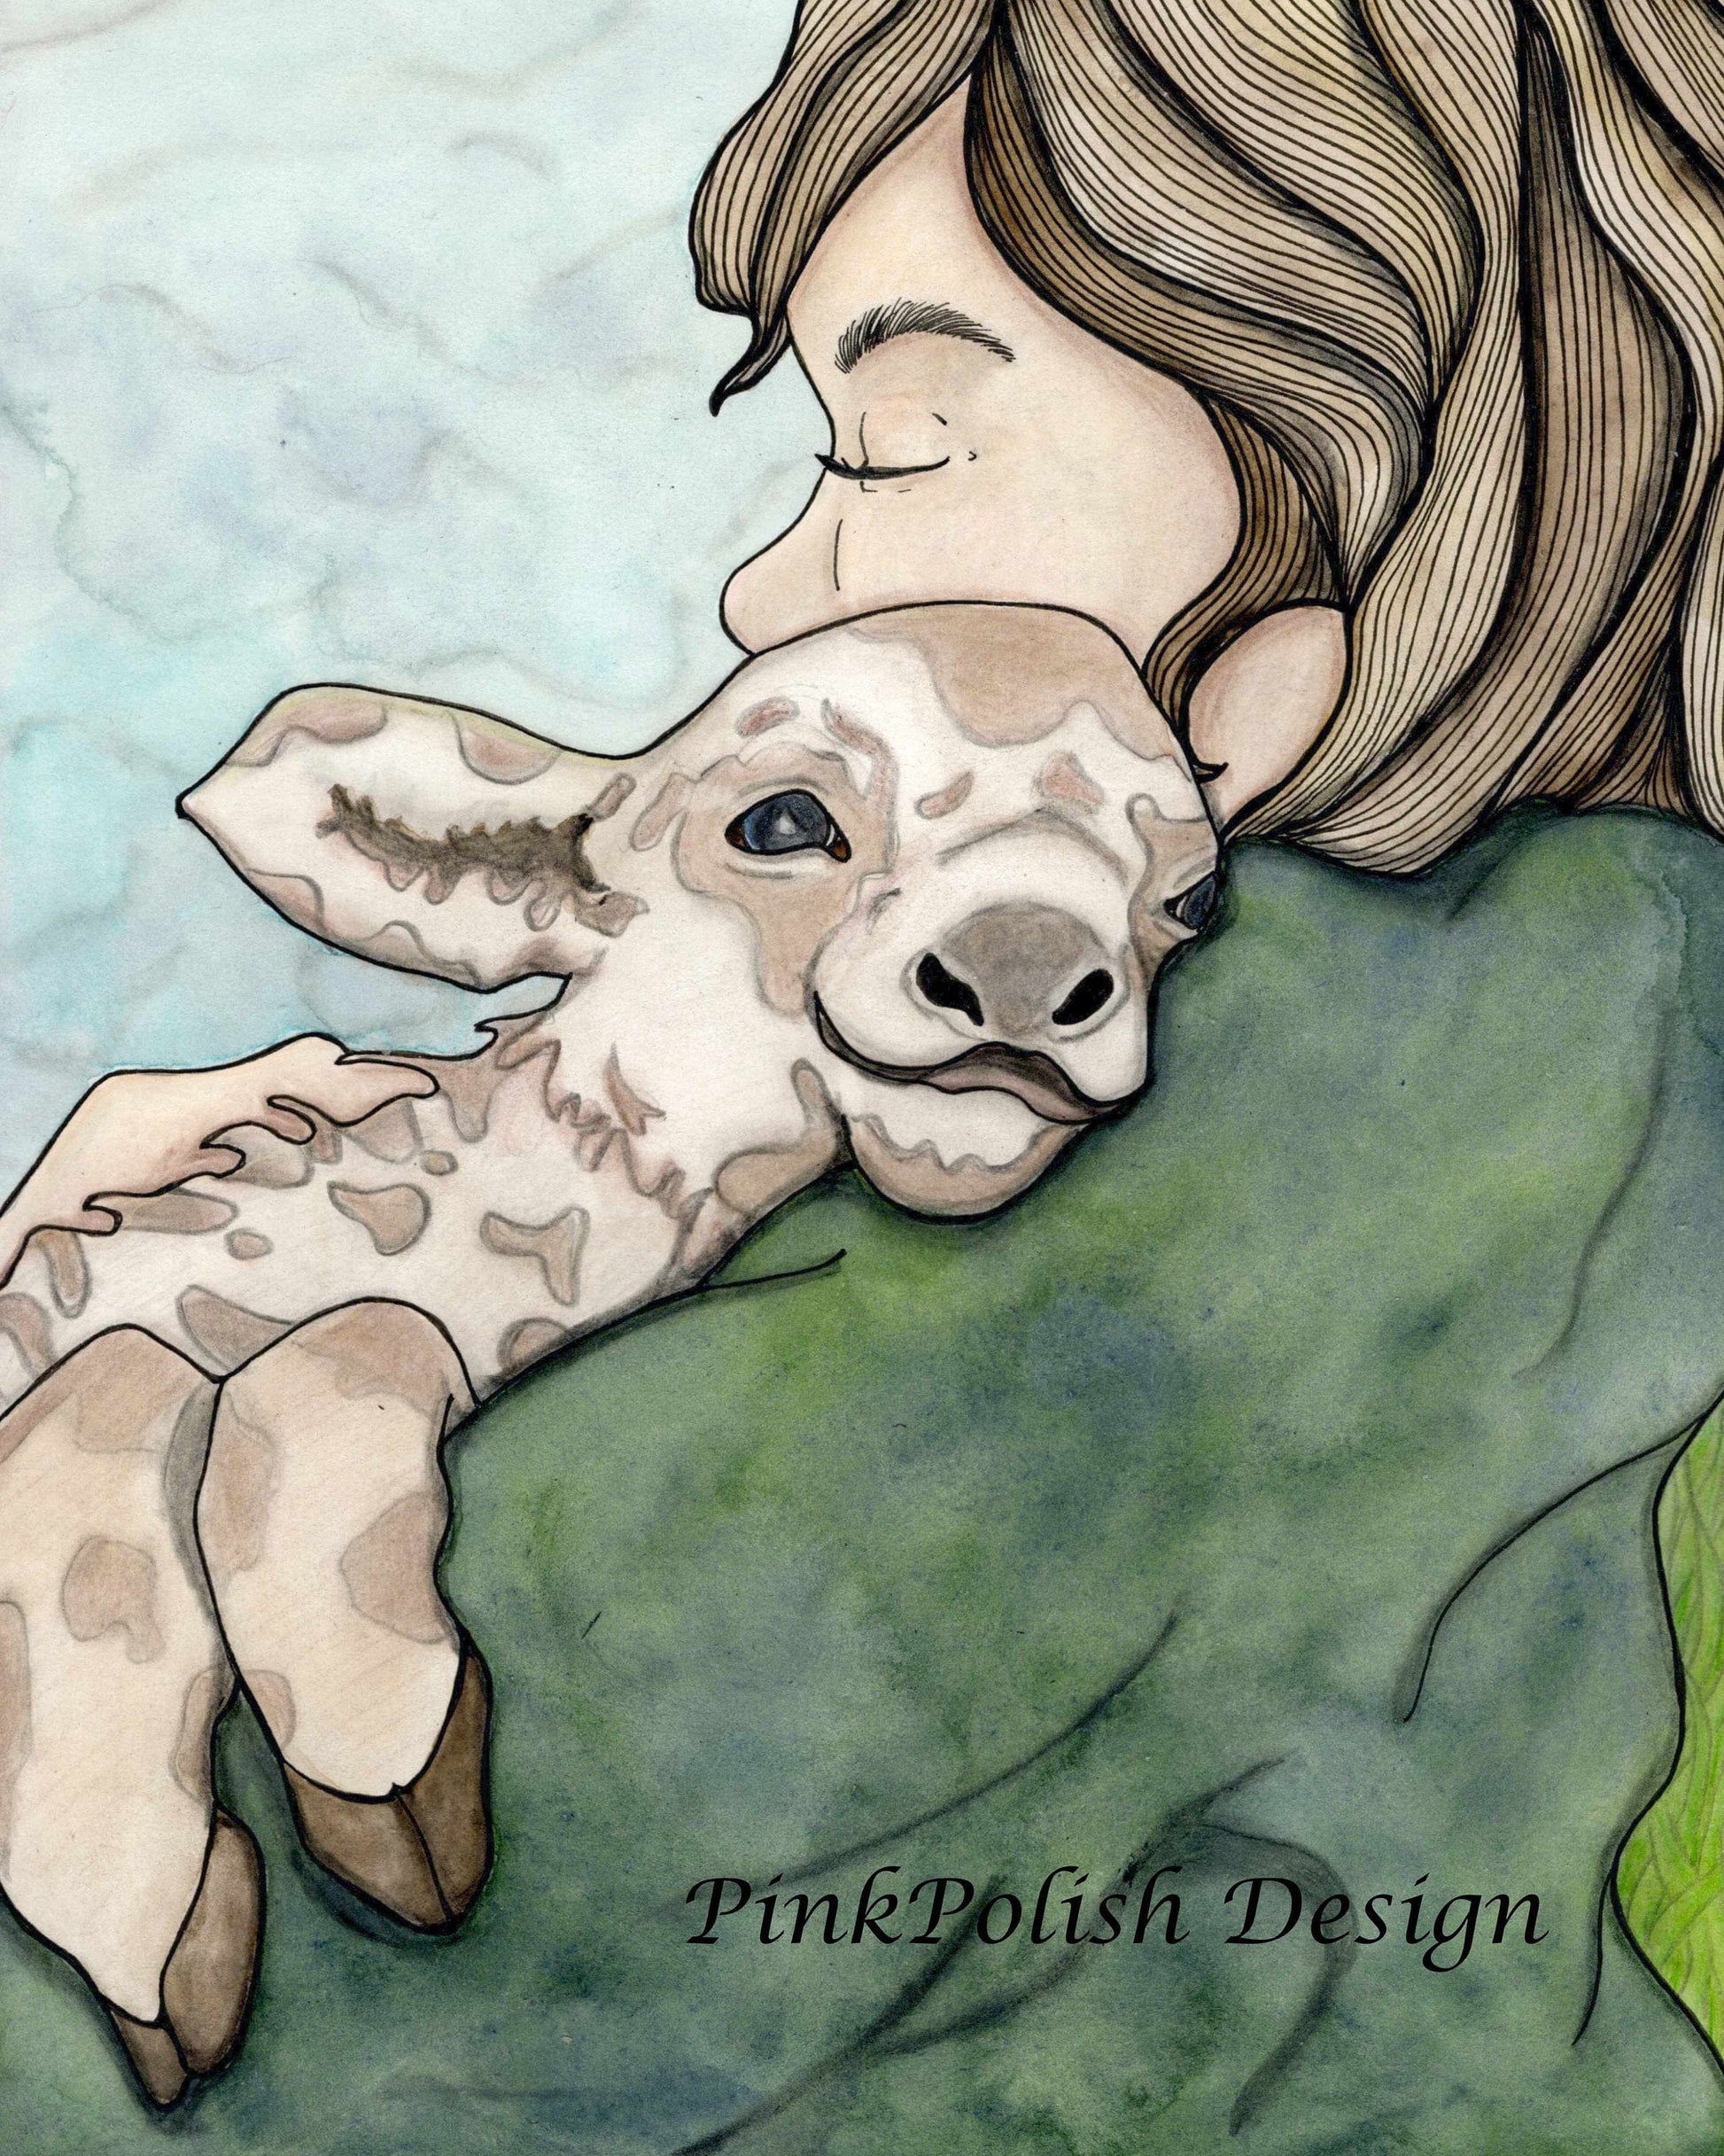 PinkPolish Design Art Prints "Farm Hugs" Watercolor Painting: Art Print